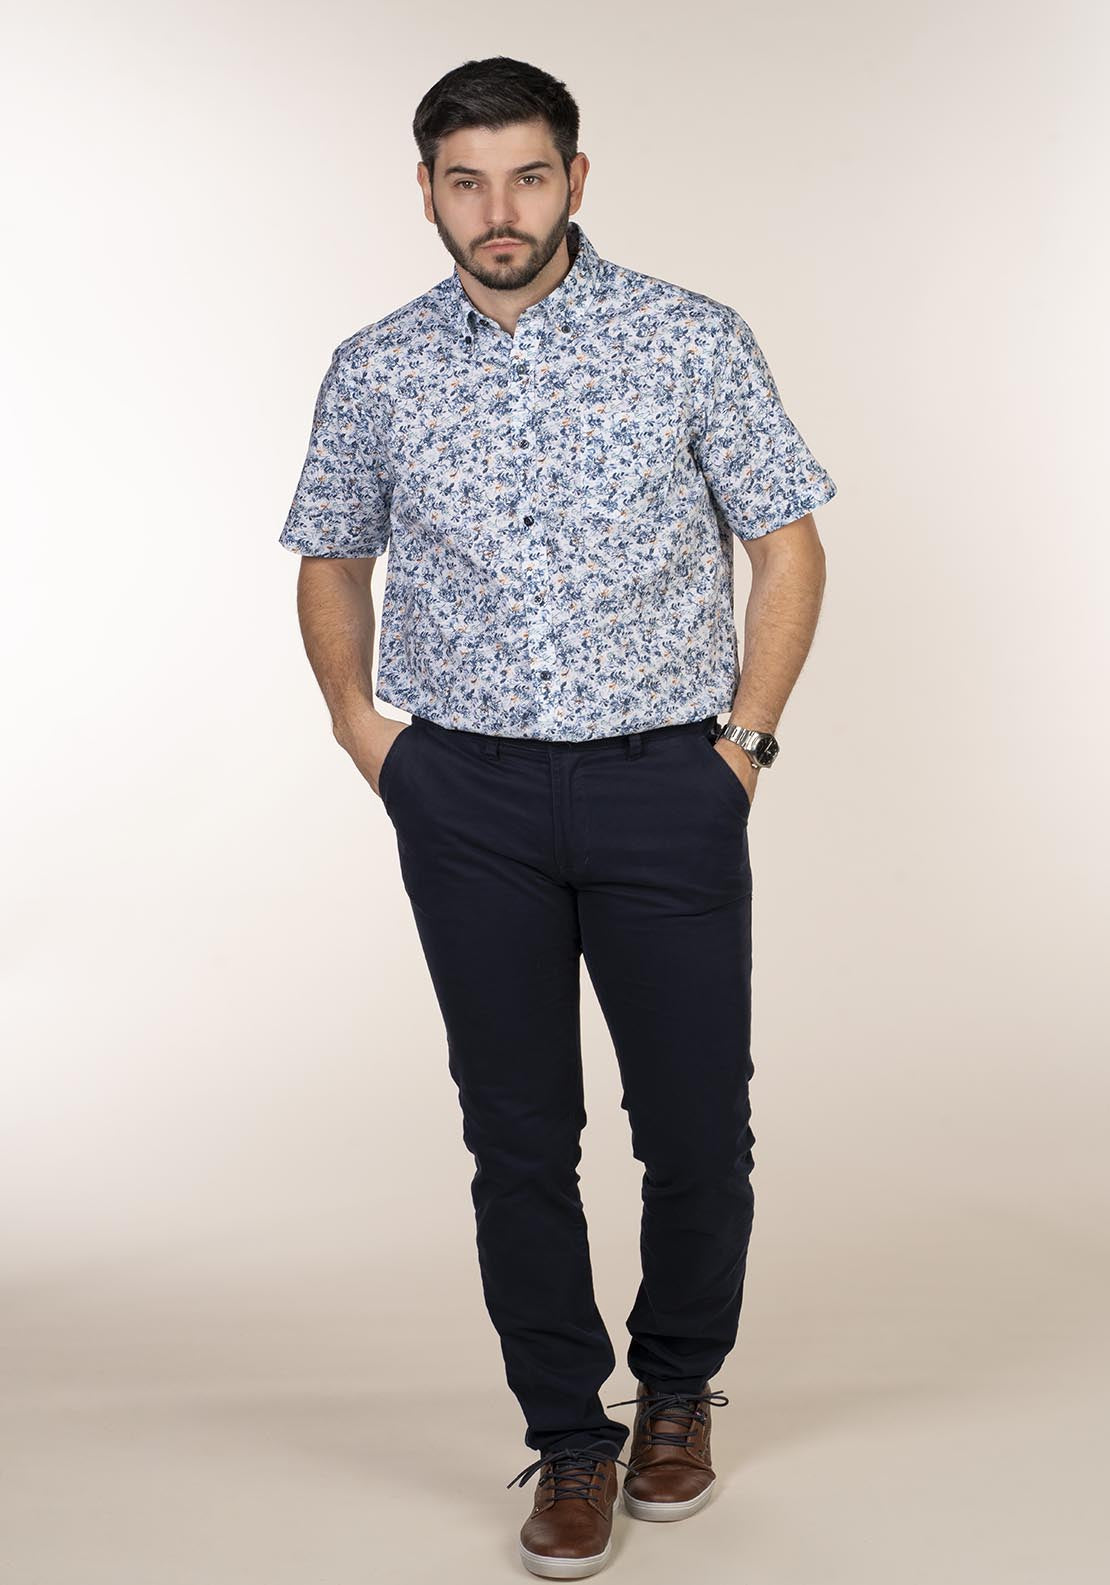 Chris Cayne Short Sleeve Print Shirt - Multi 1 Shaws Department Stores